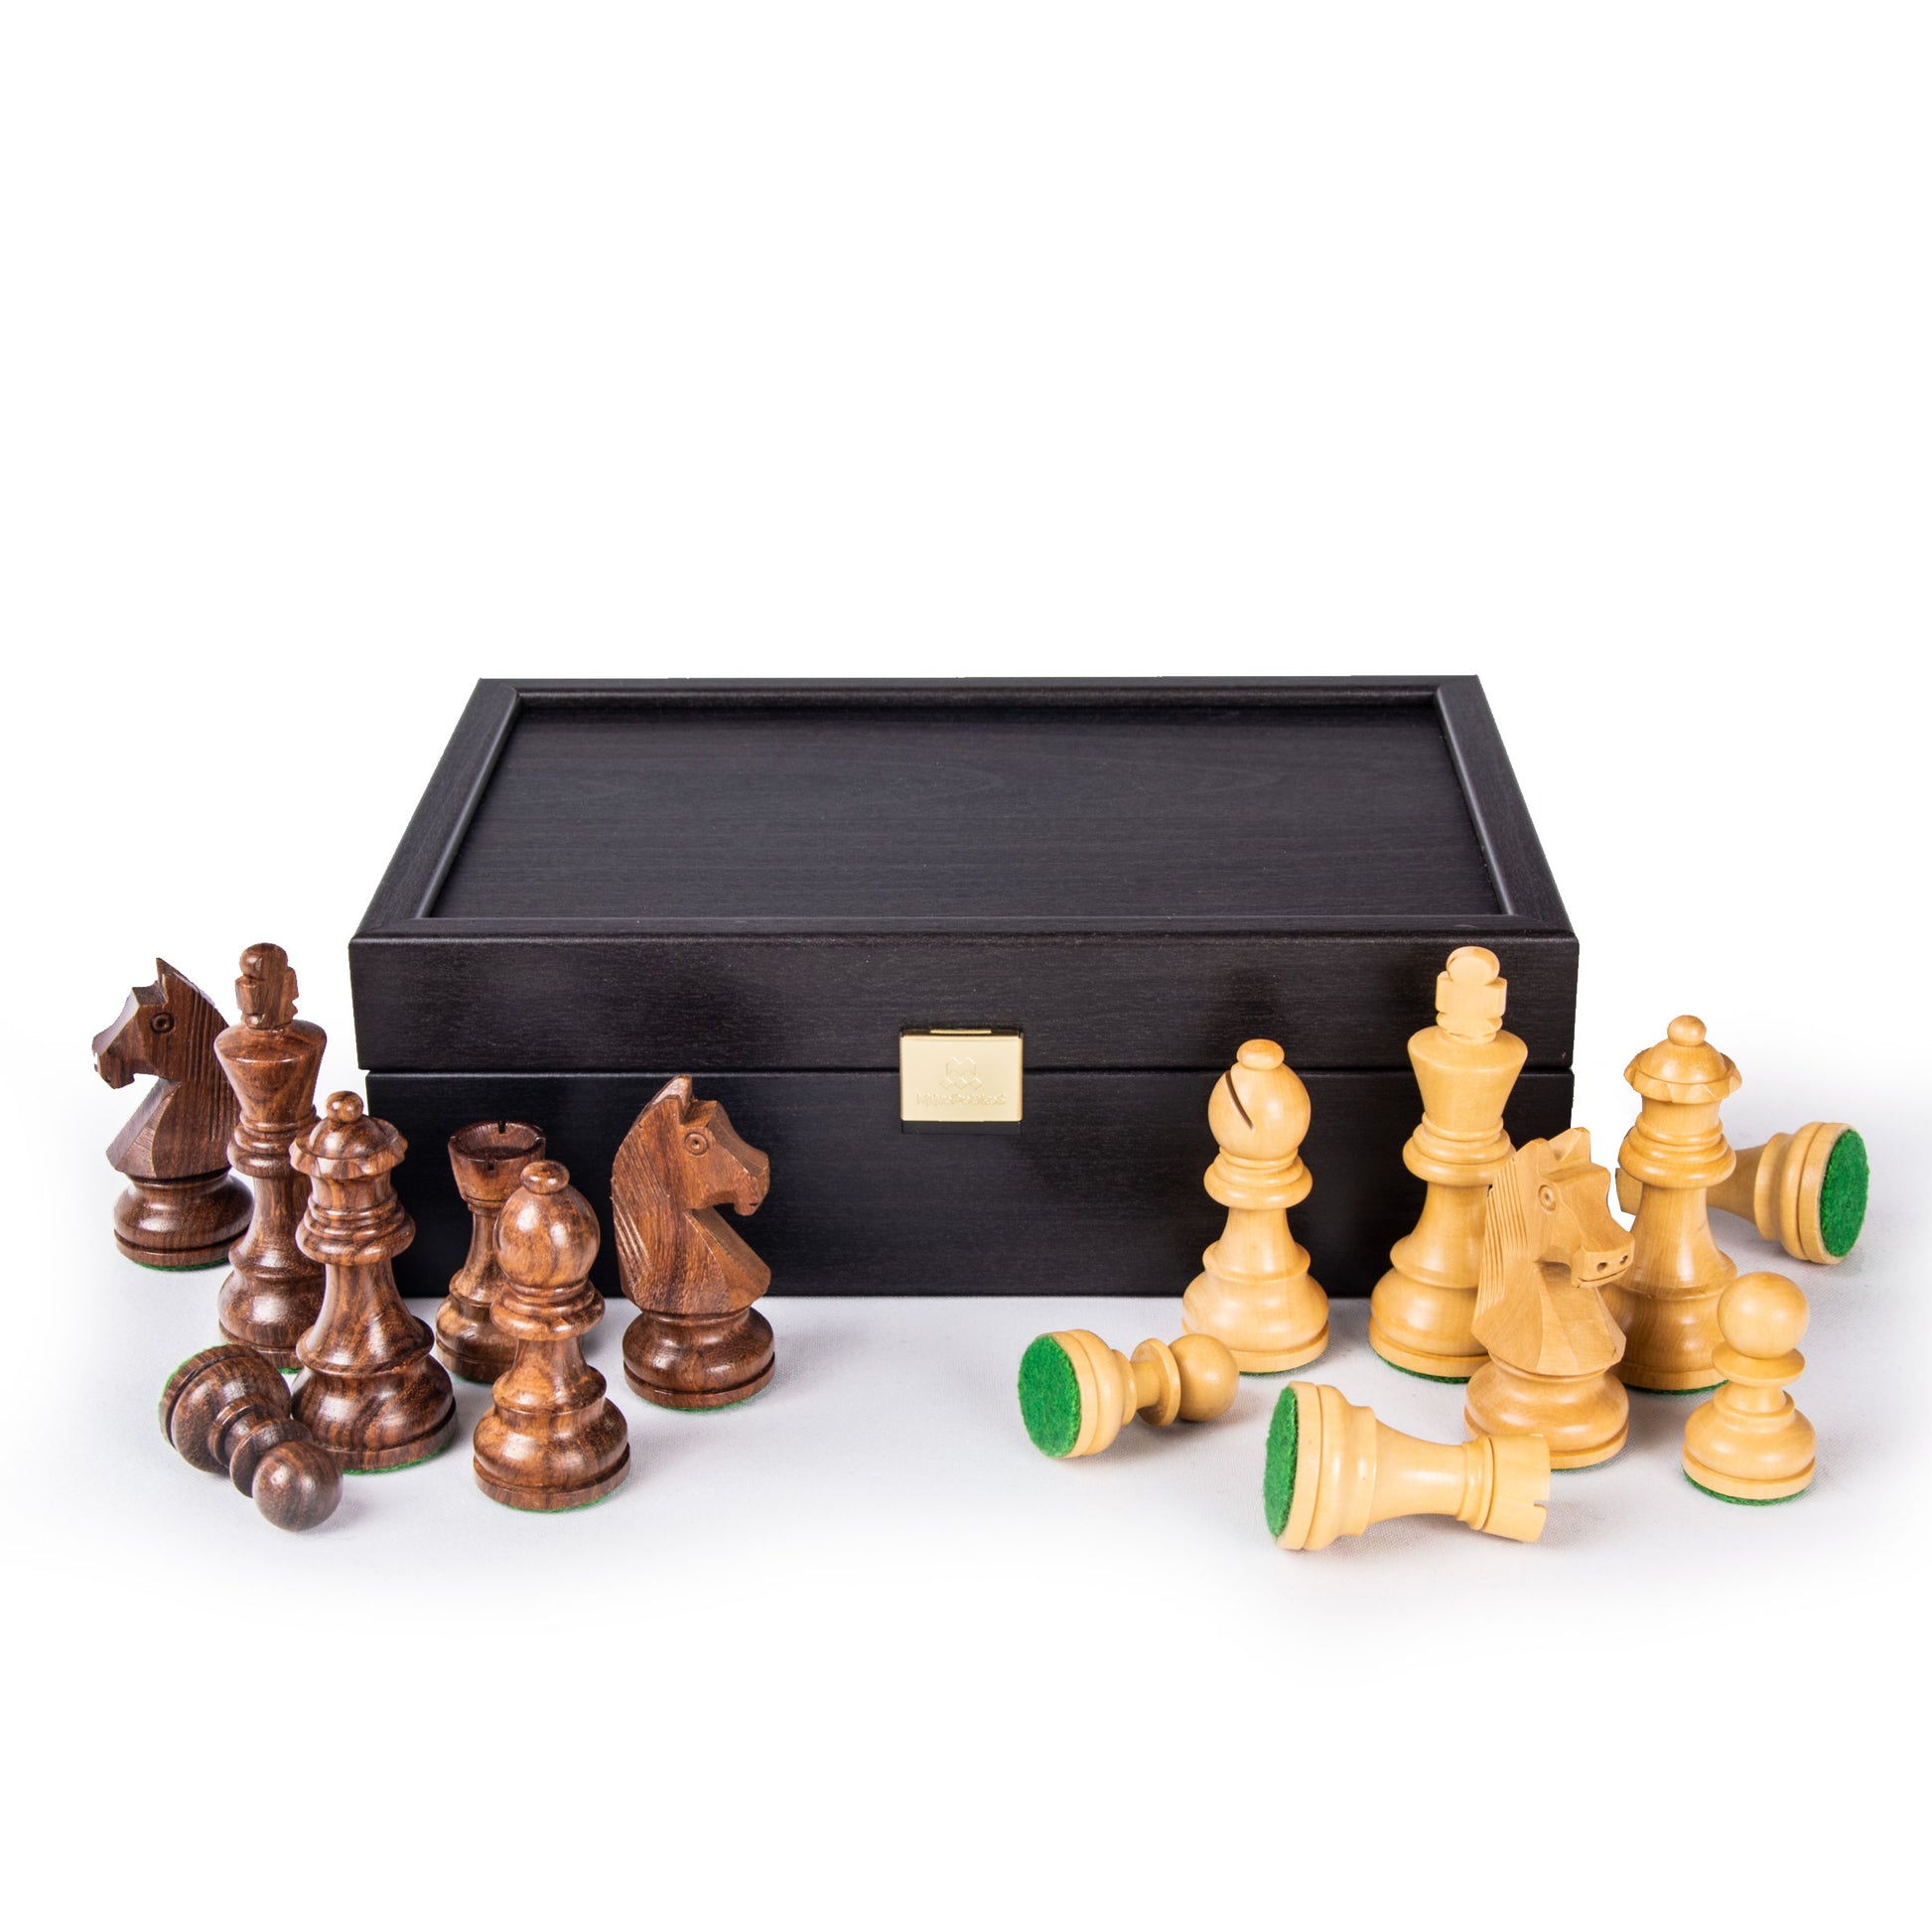 Premium Wenge Wooden Box for Chessmen - 6.5cm King - Premium Chess from MANOPOULOS Chess & Backgammon - Just €14.90! Shop now at MANOPOULOS Chess & Backgammon